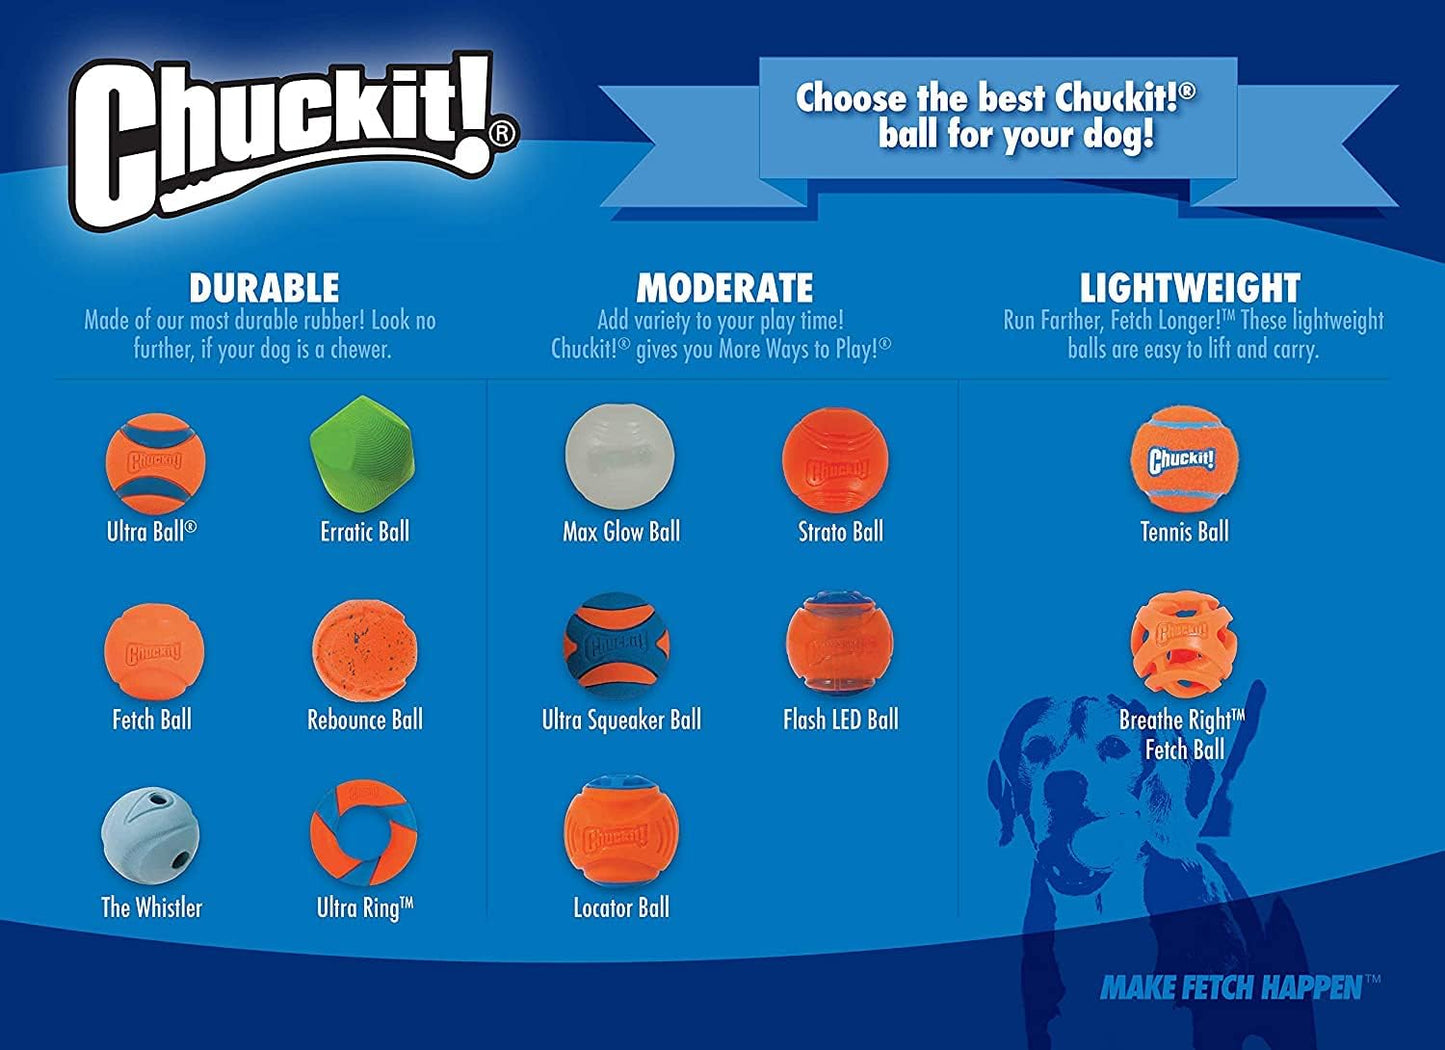 Chuckit! Ultra Squeaker Ball Medium 2x